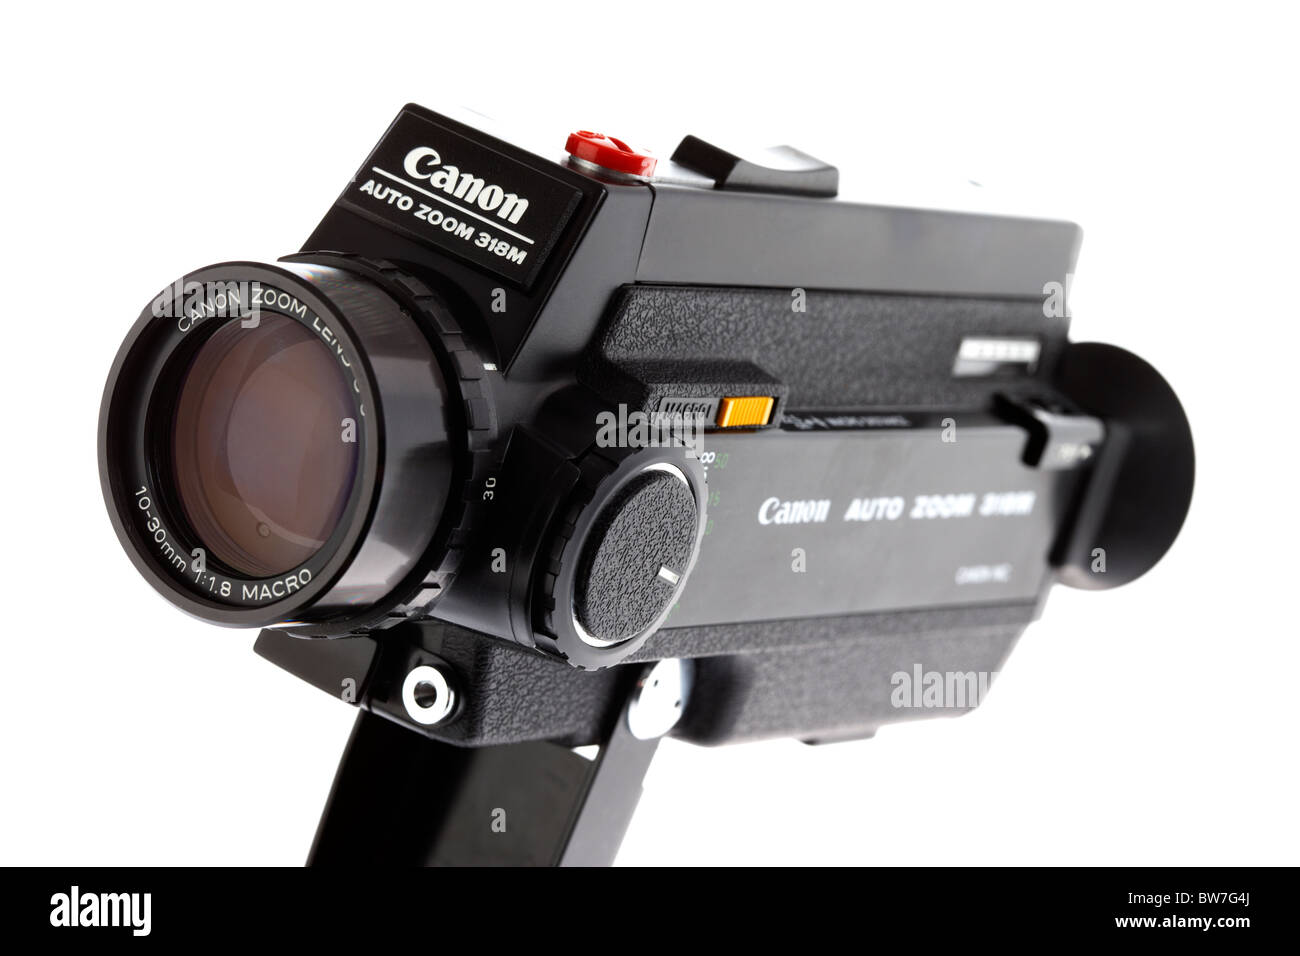 Canon filmkamera -Fotos und -Bildmaterial in hoher Auflösung – Alamy